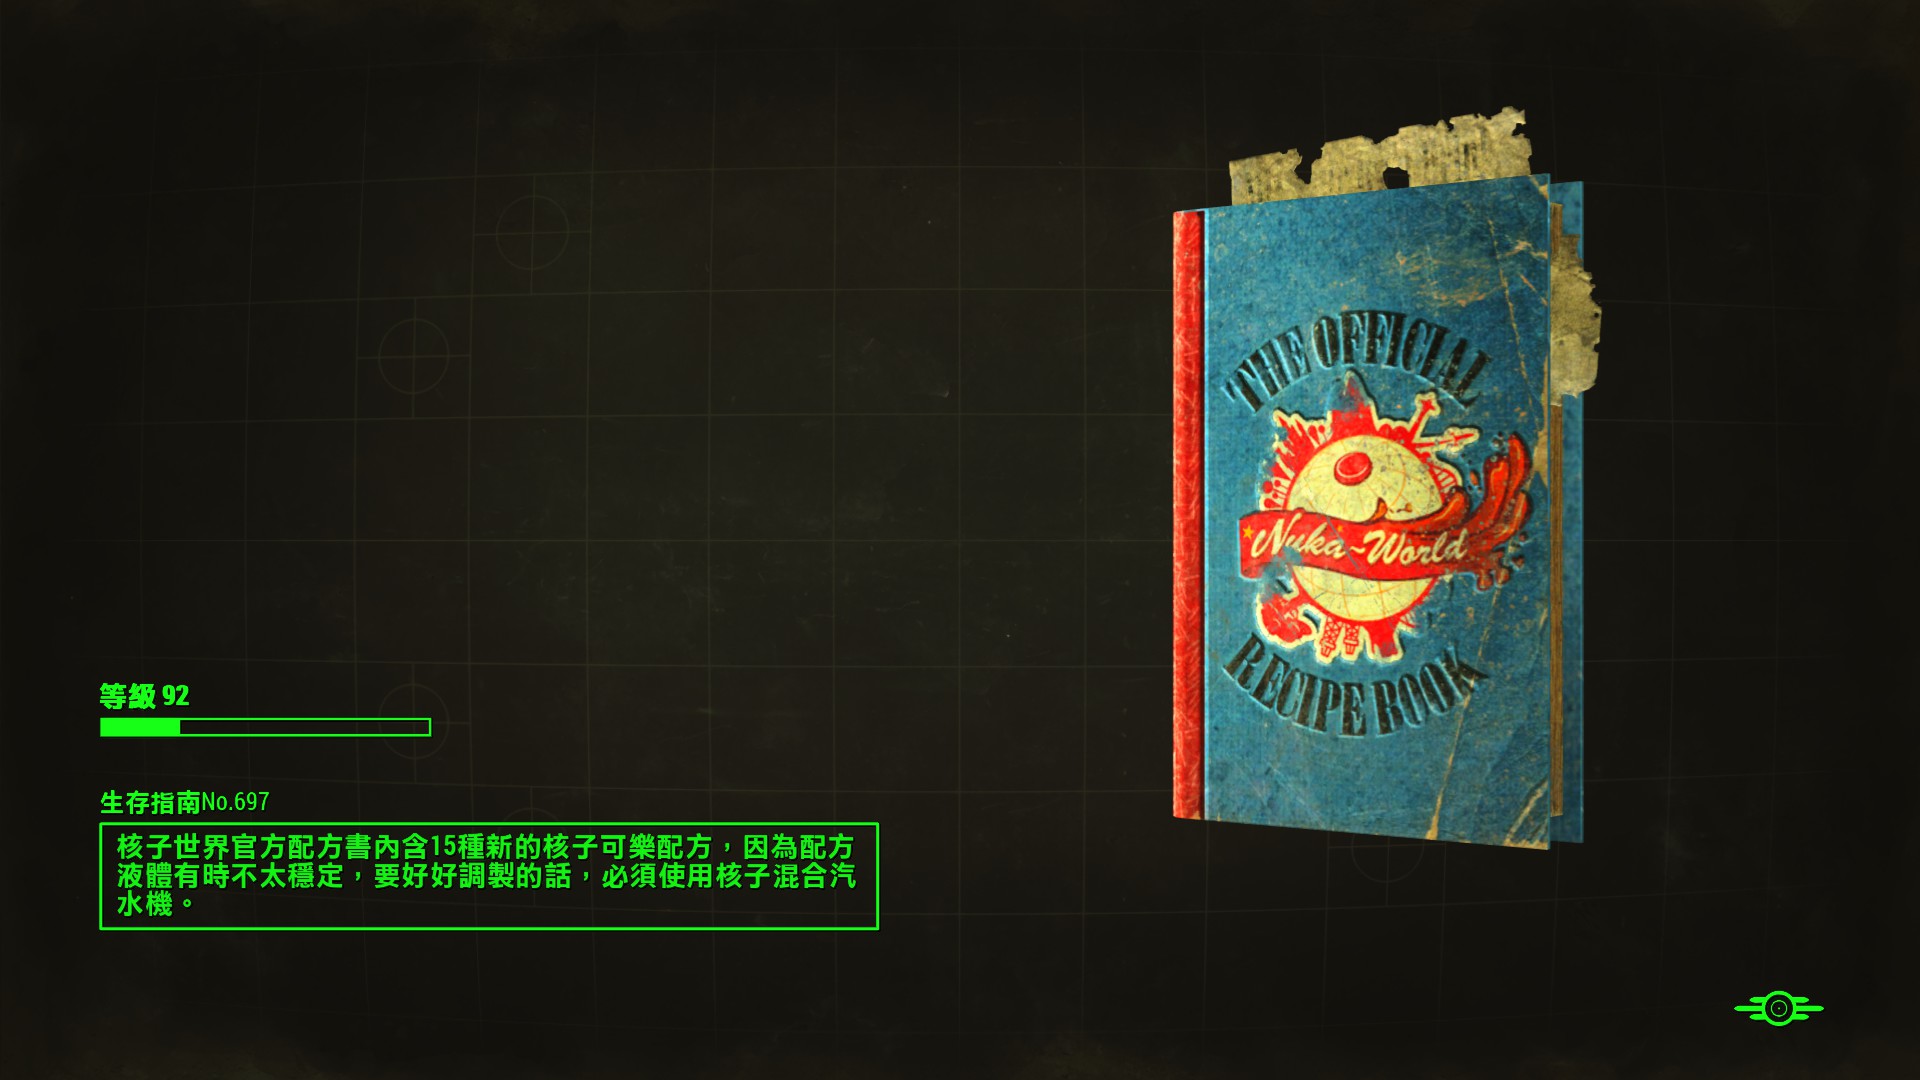 Fallout 4 nuka world рецепты ядер колы фото 25